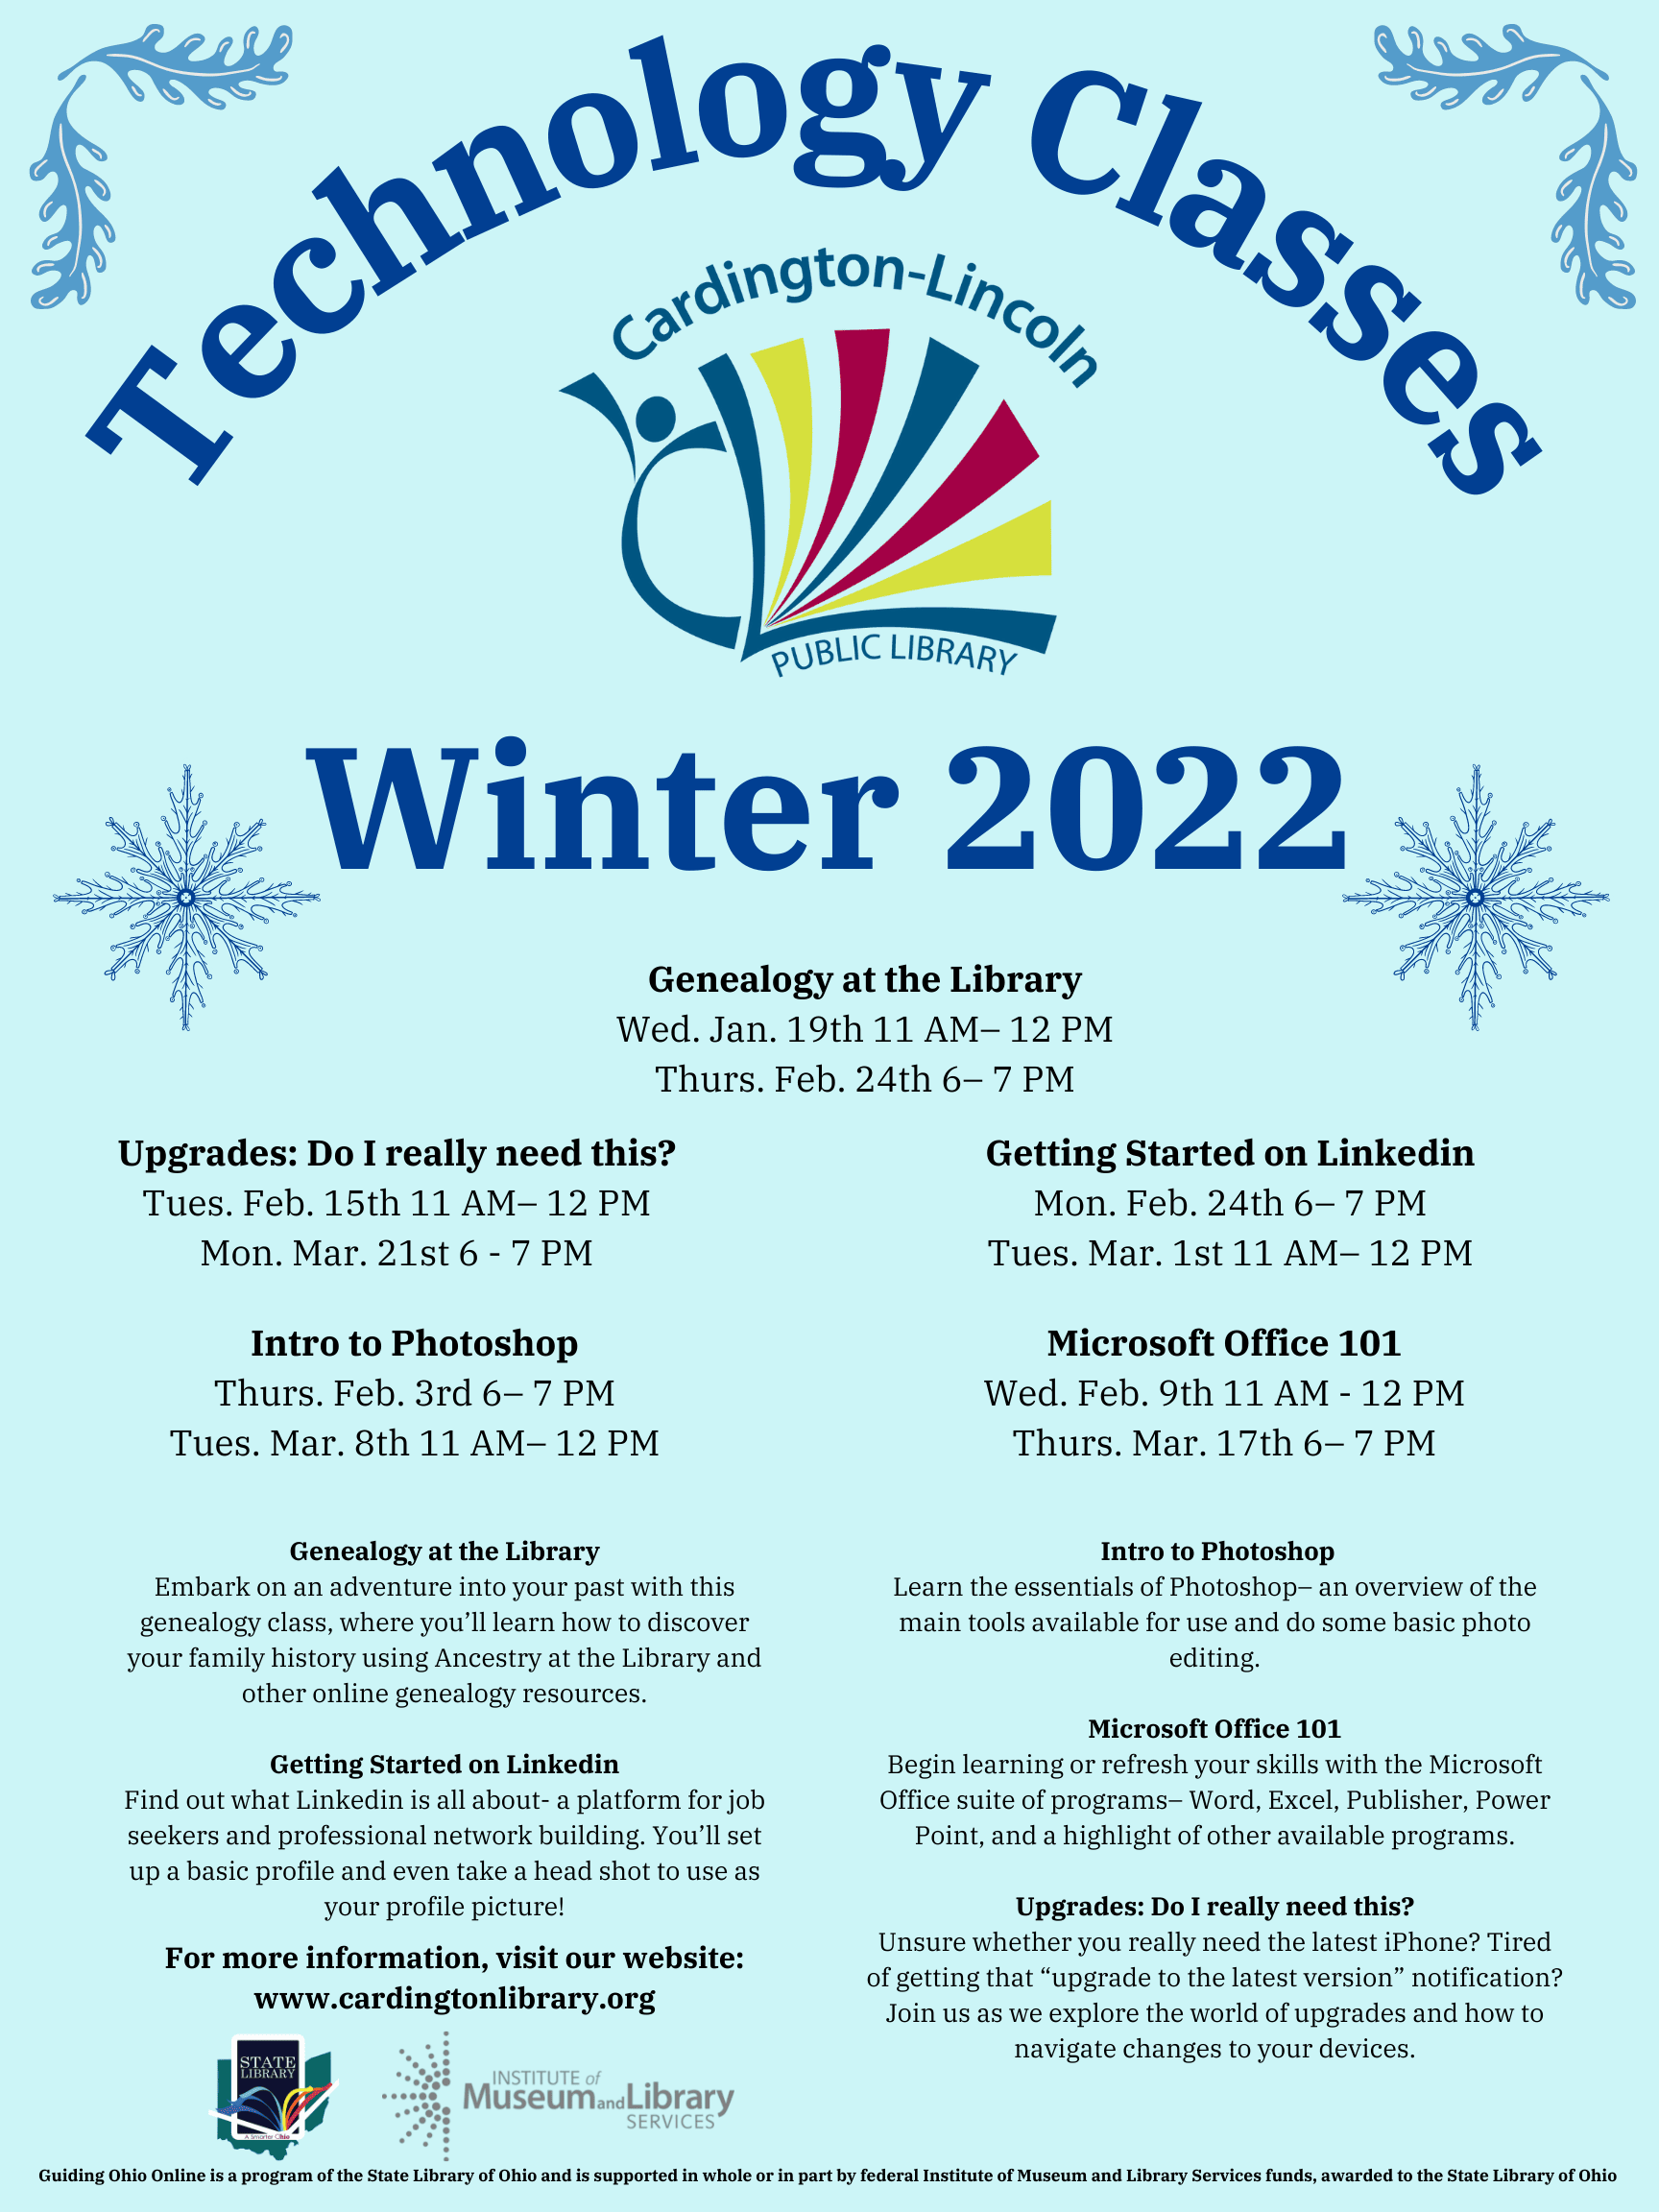 Winter 2022 Technology Classes